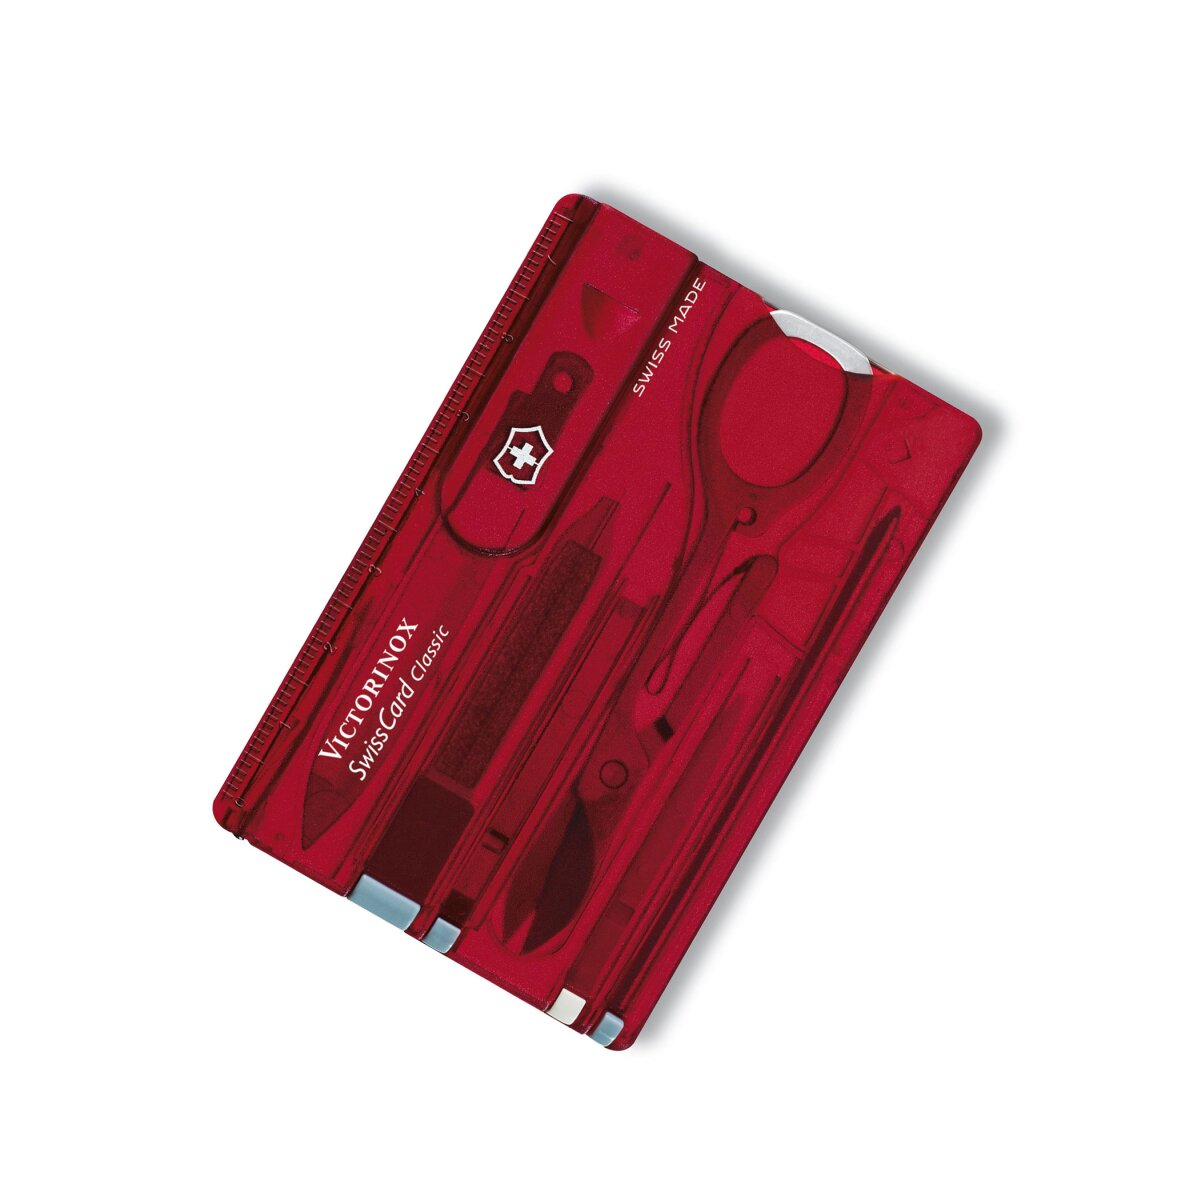 Swiss Card Classic, red, Victorinox